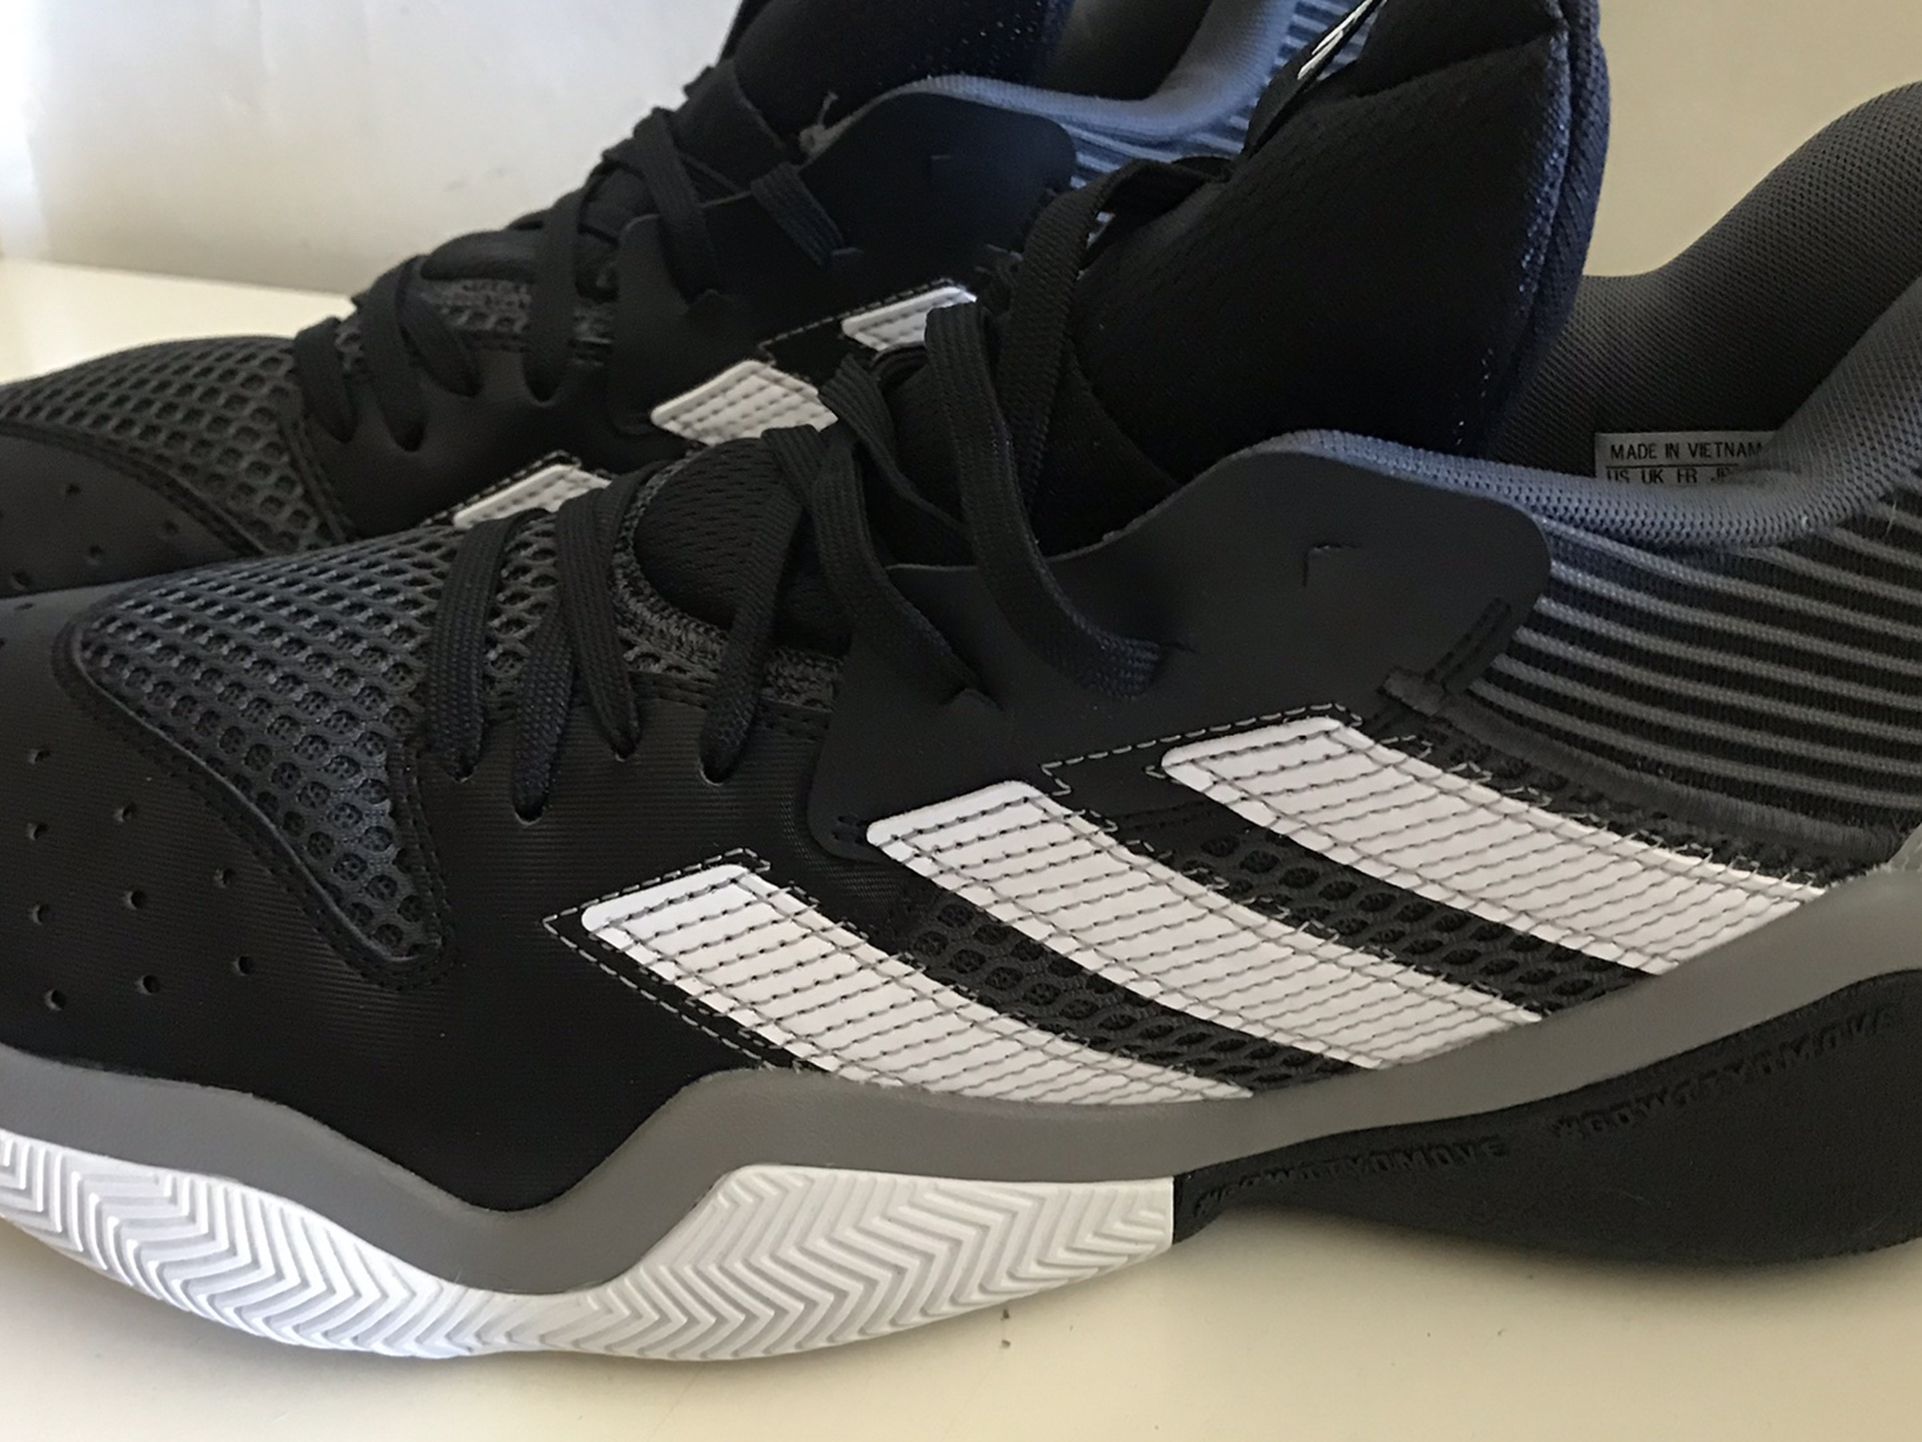 Adidas harden stepback Basketball shoe / Black white and gray size 13 brand new never worn